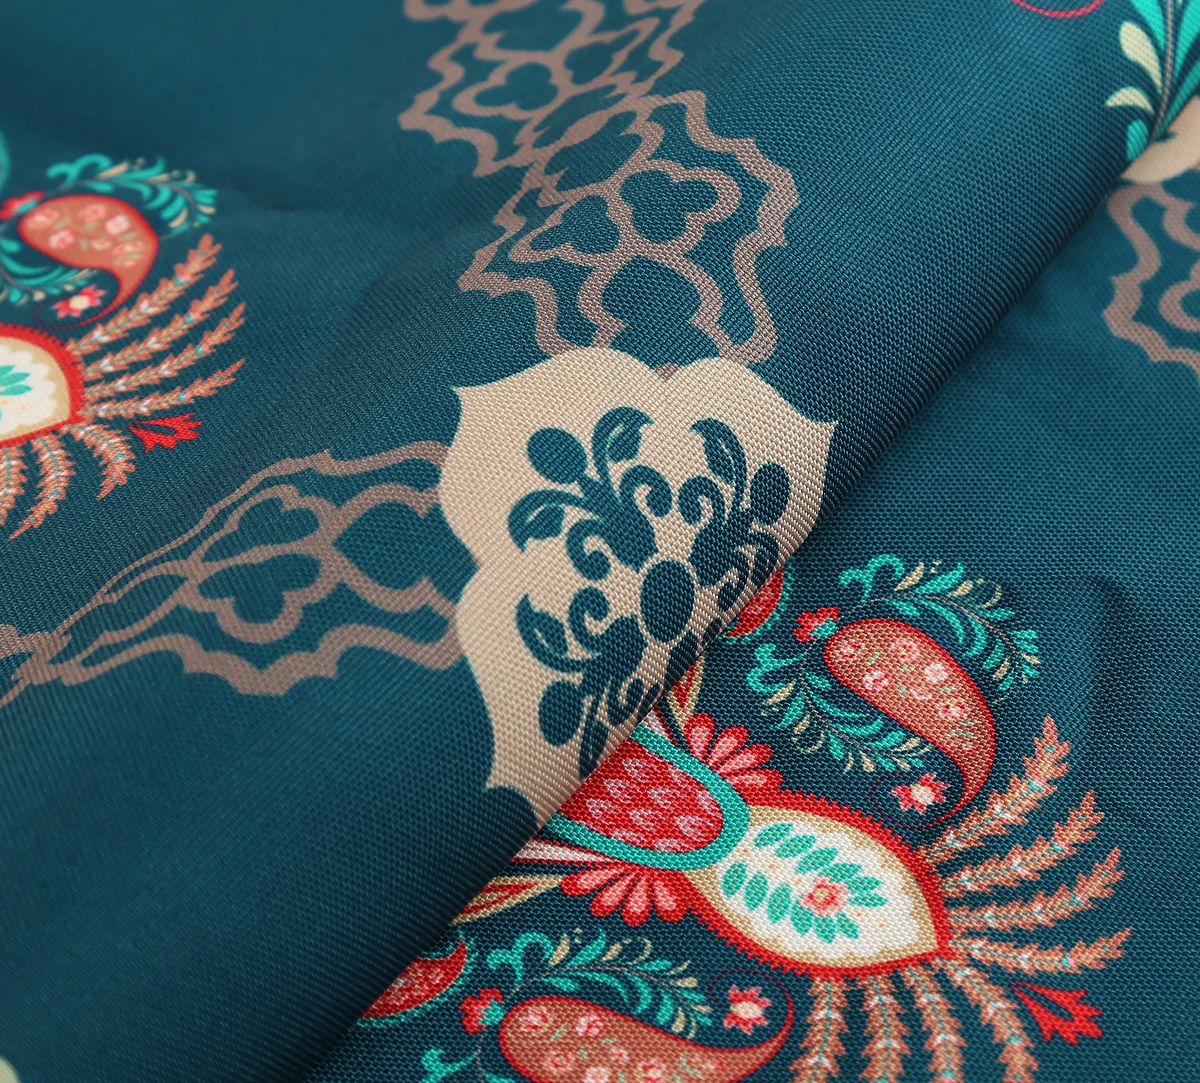 India Circus by Krsnaa Mehta Peacock Feathers of Twilight Fabric